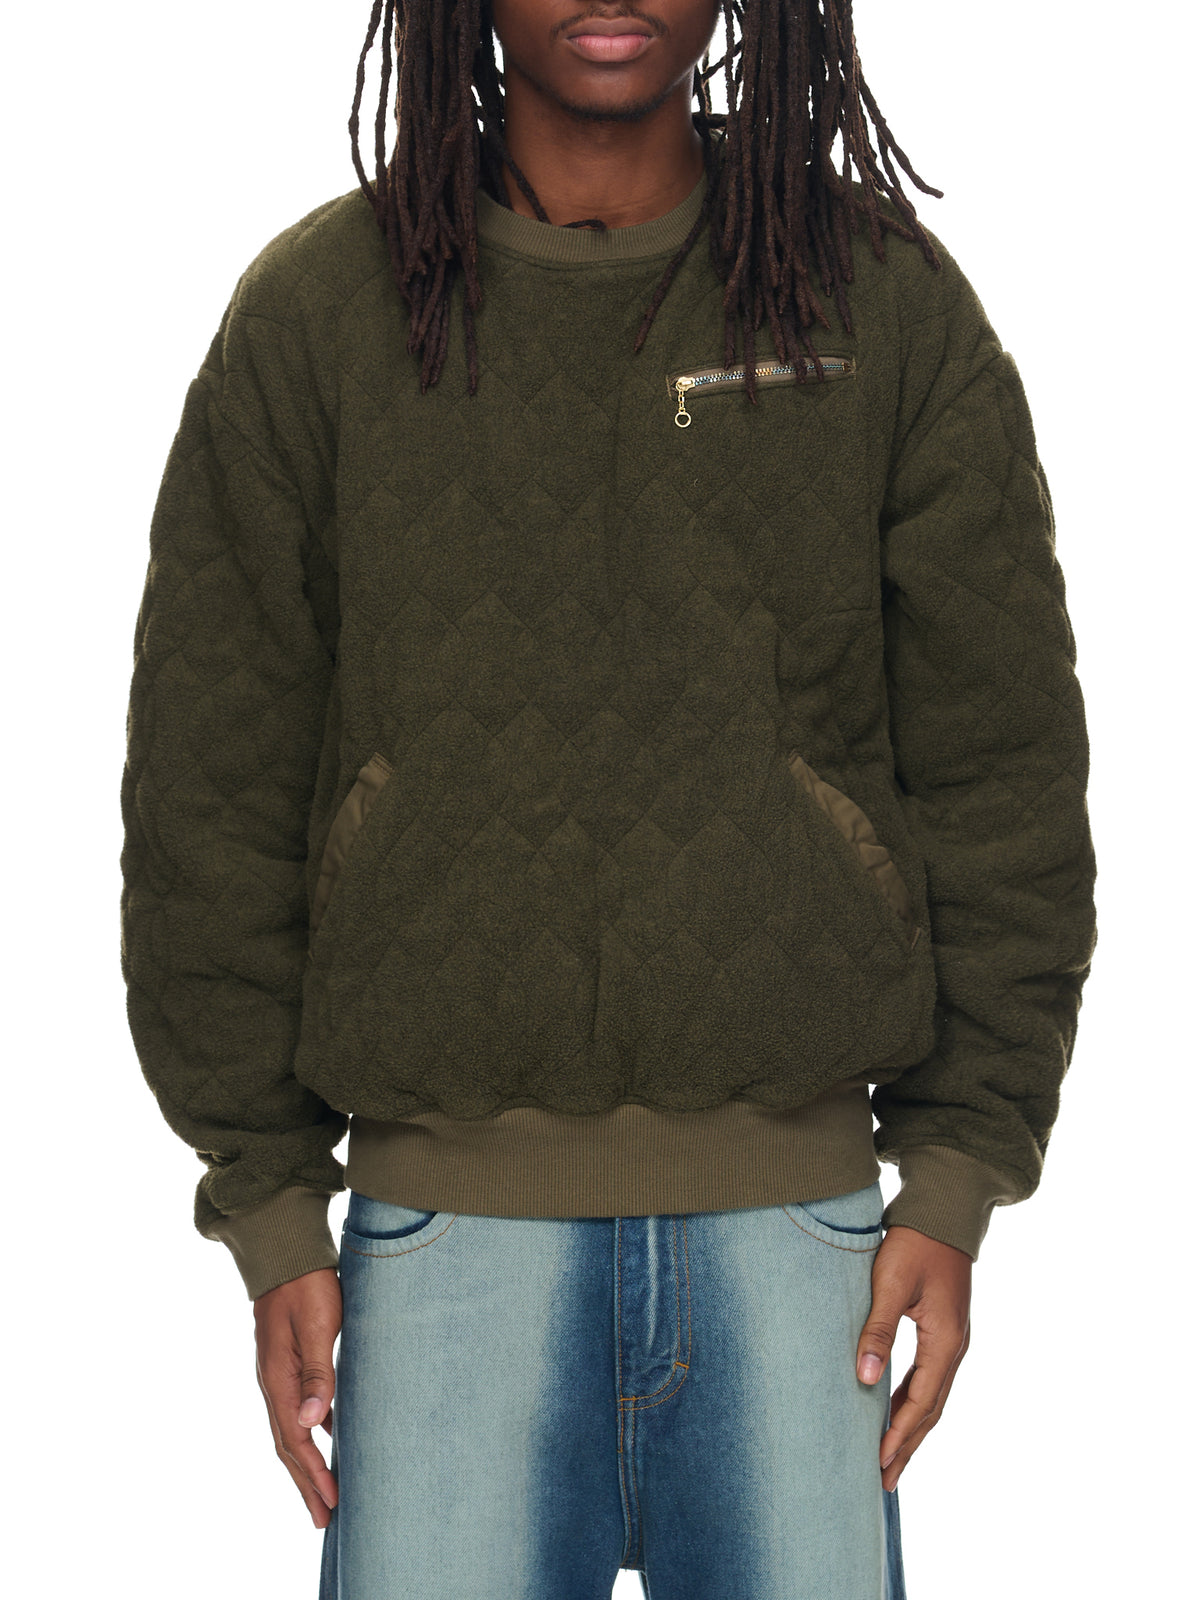 Quilted Fleece Sweater (EK-1268-KHA-KHAKI)